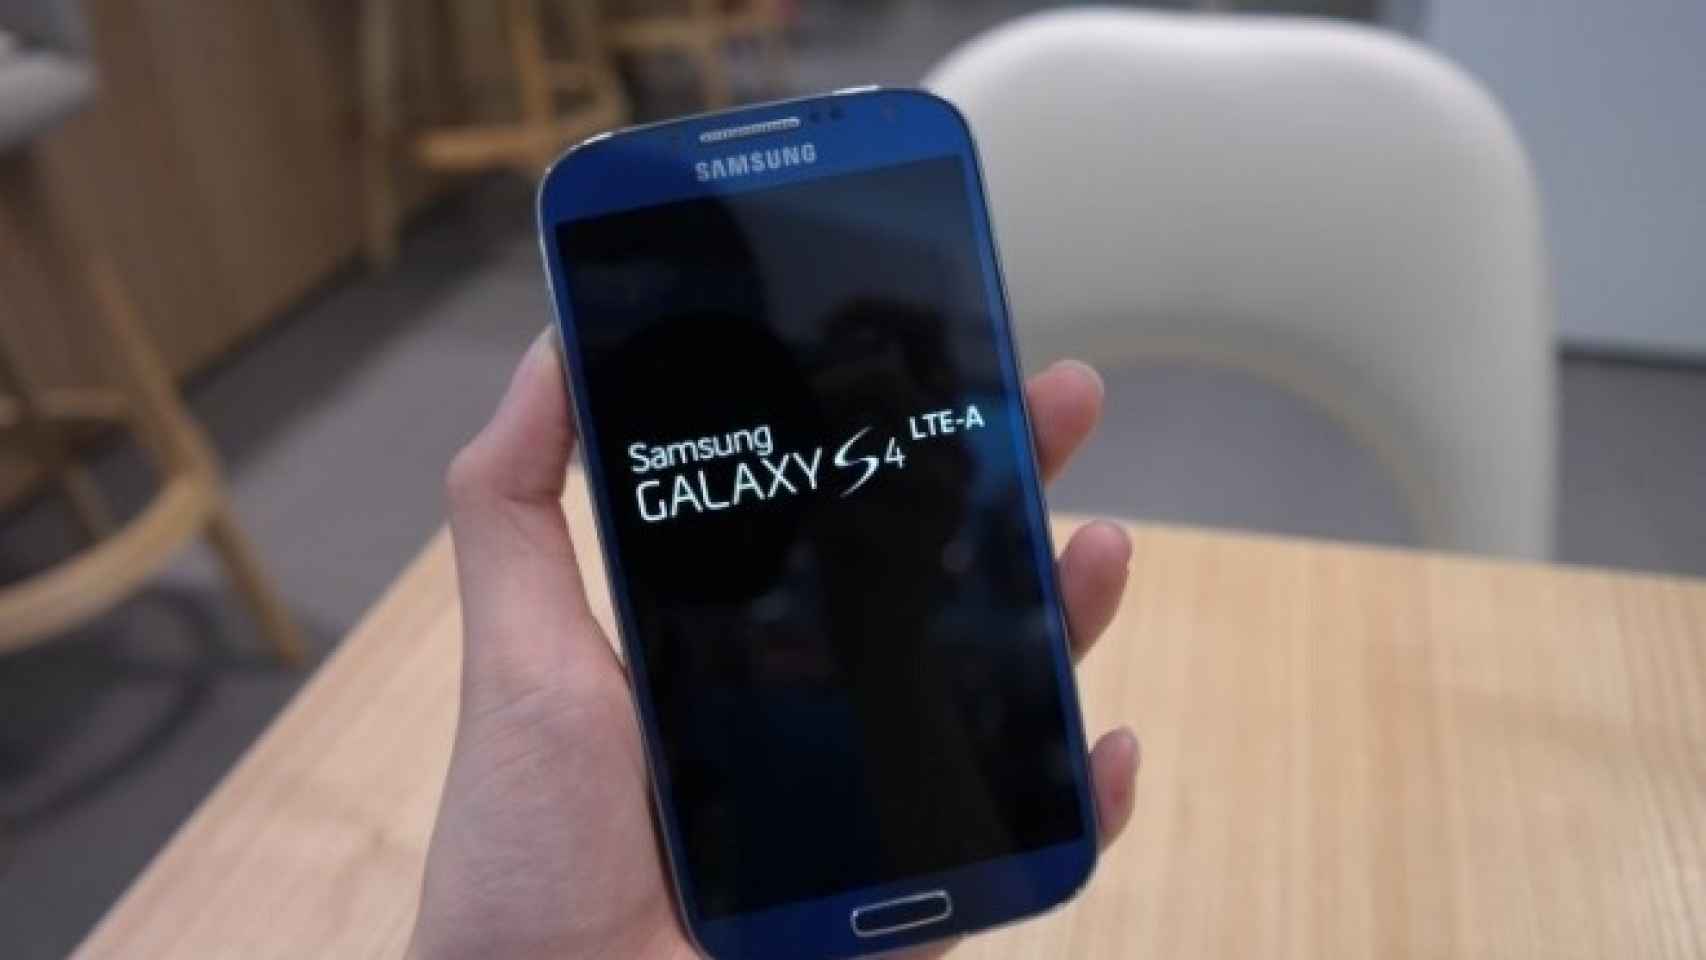 Samsung Galaxy S4 LTE-Advanced, procesador mejorado y velocidades de descarga de vértigo